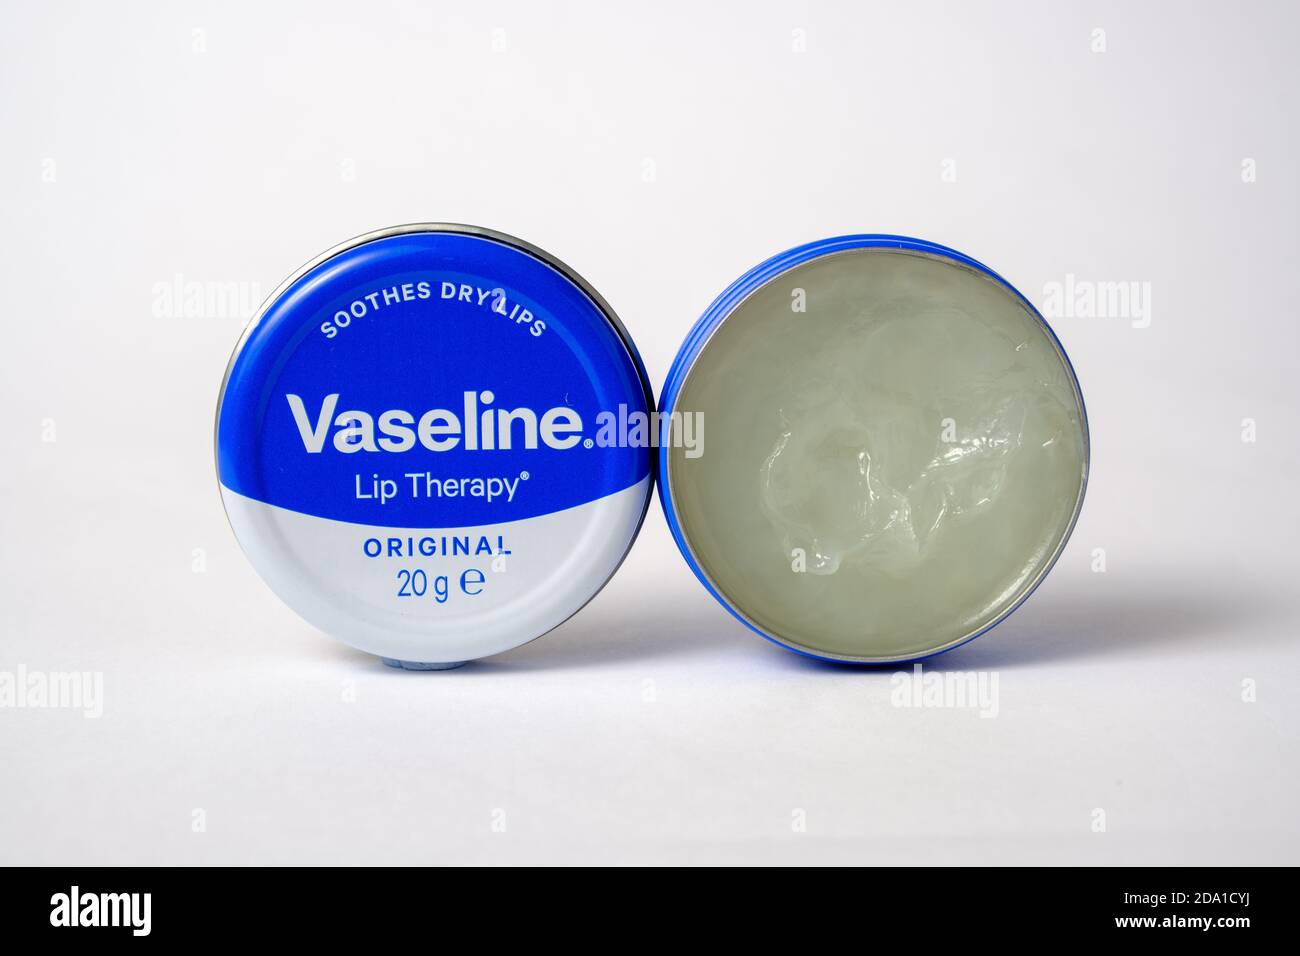 Vaseline lip treatment product. Close up image. Petroleum jelly-based product for skin. Stock Photo